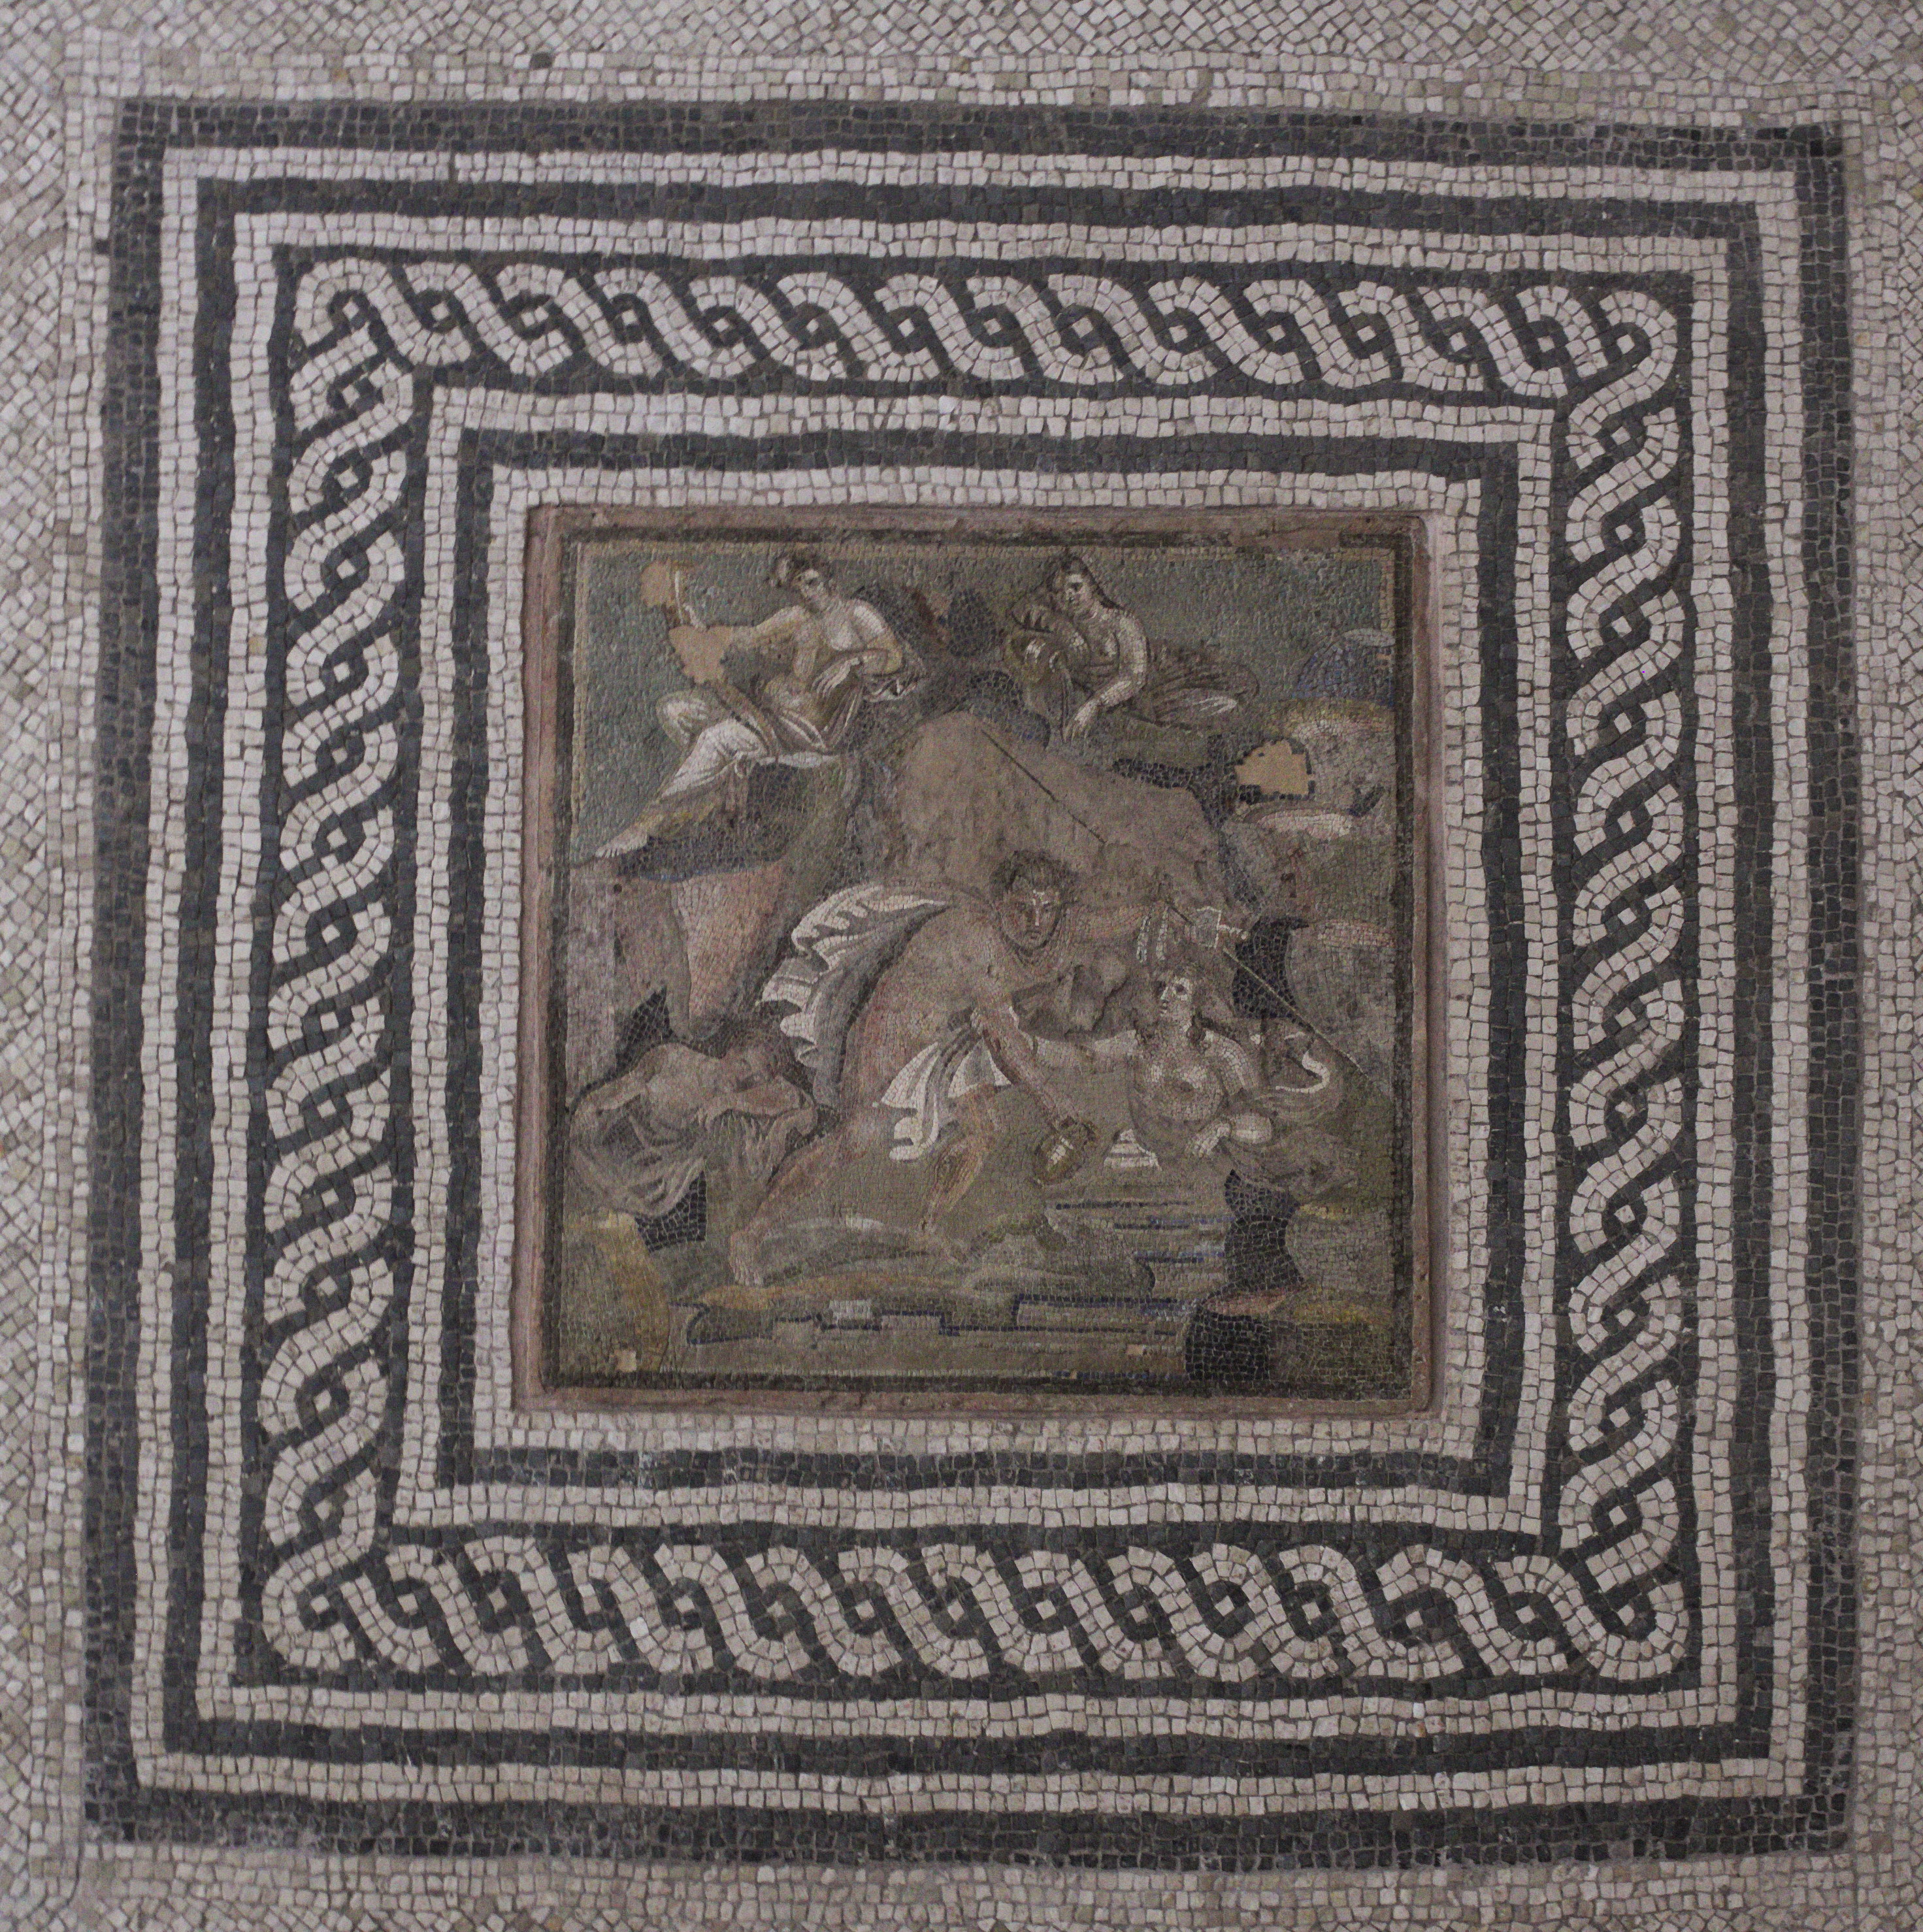 Der Weingott Dionysos als Fussbodenmosaik